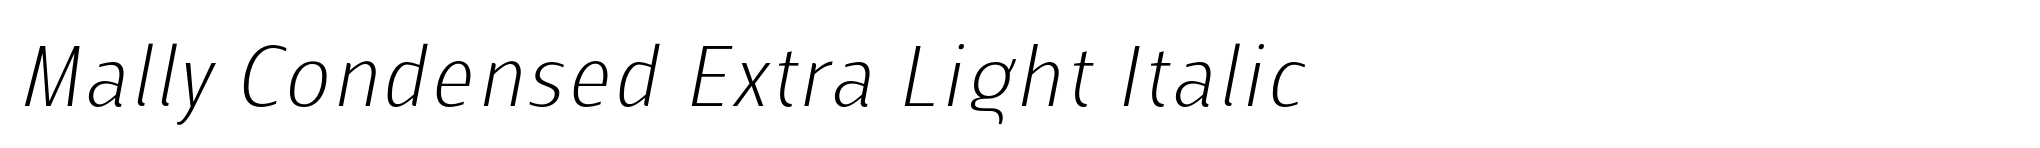 Mally Condensed Extra Light Italic image